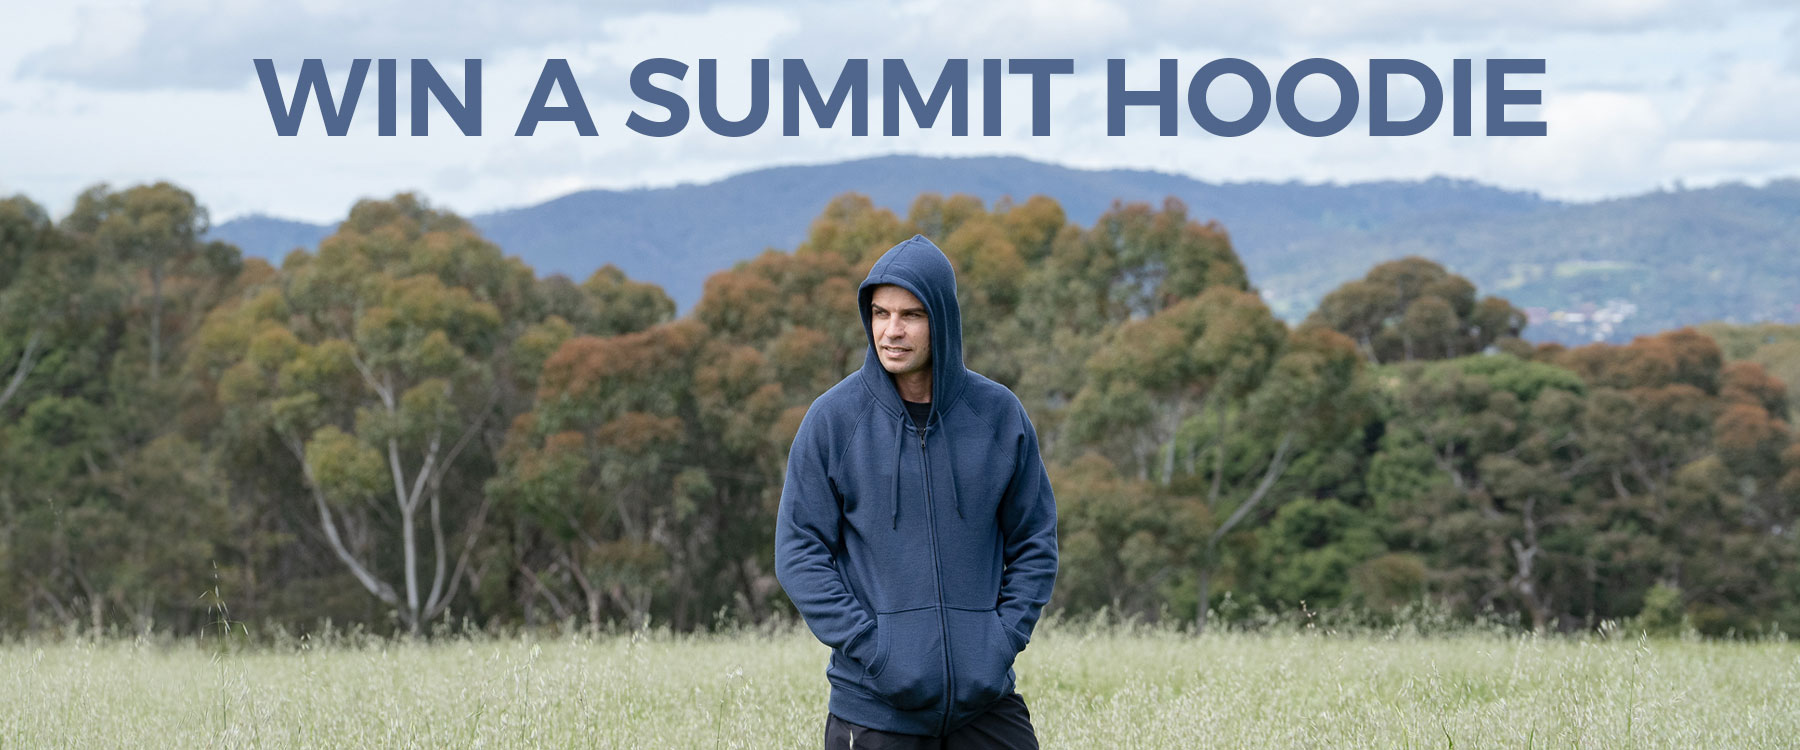 Win a Summit Hoodie